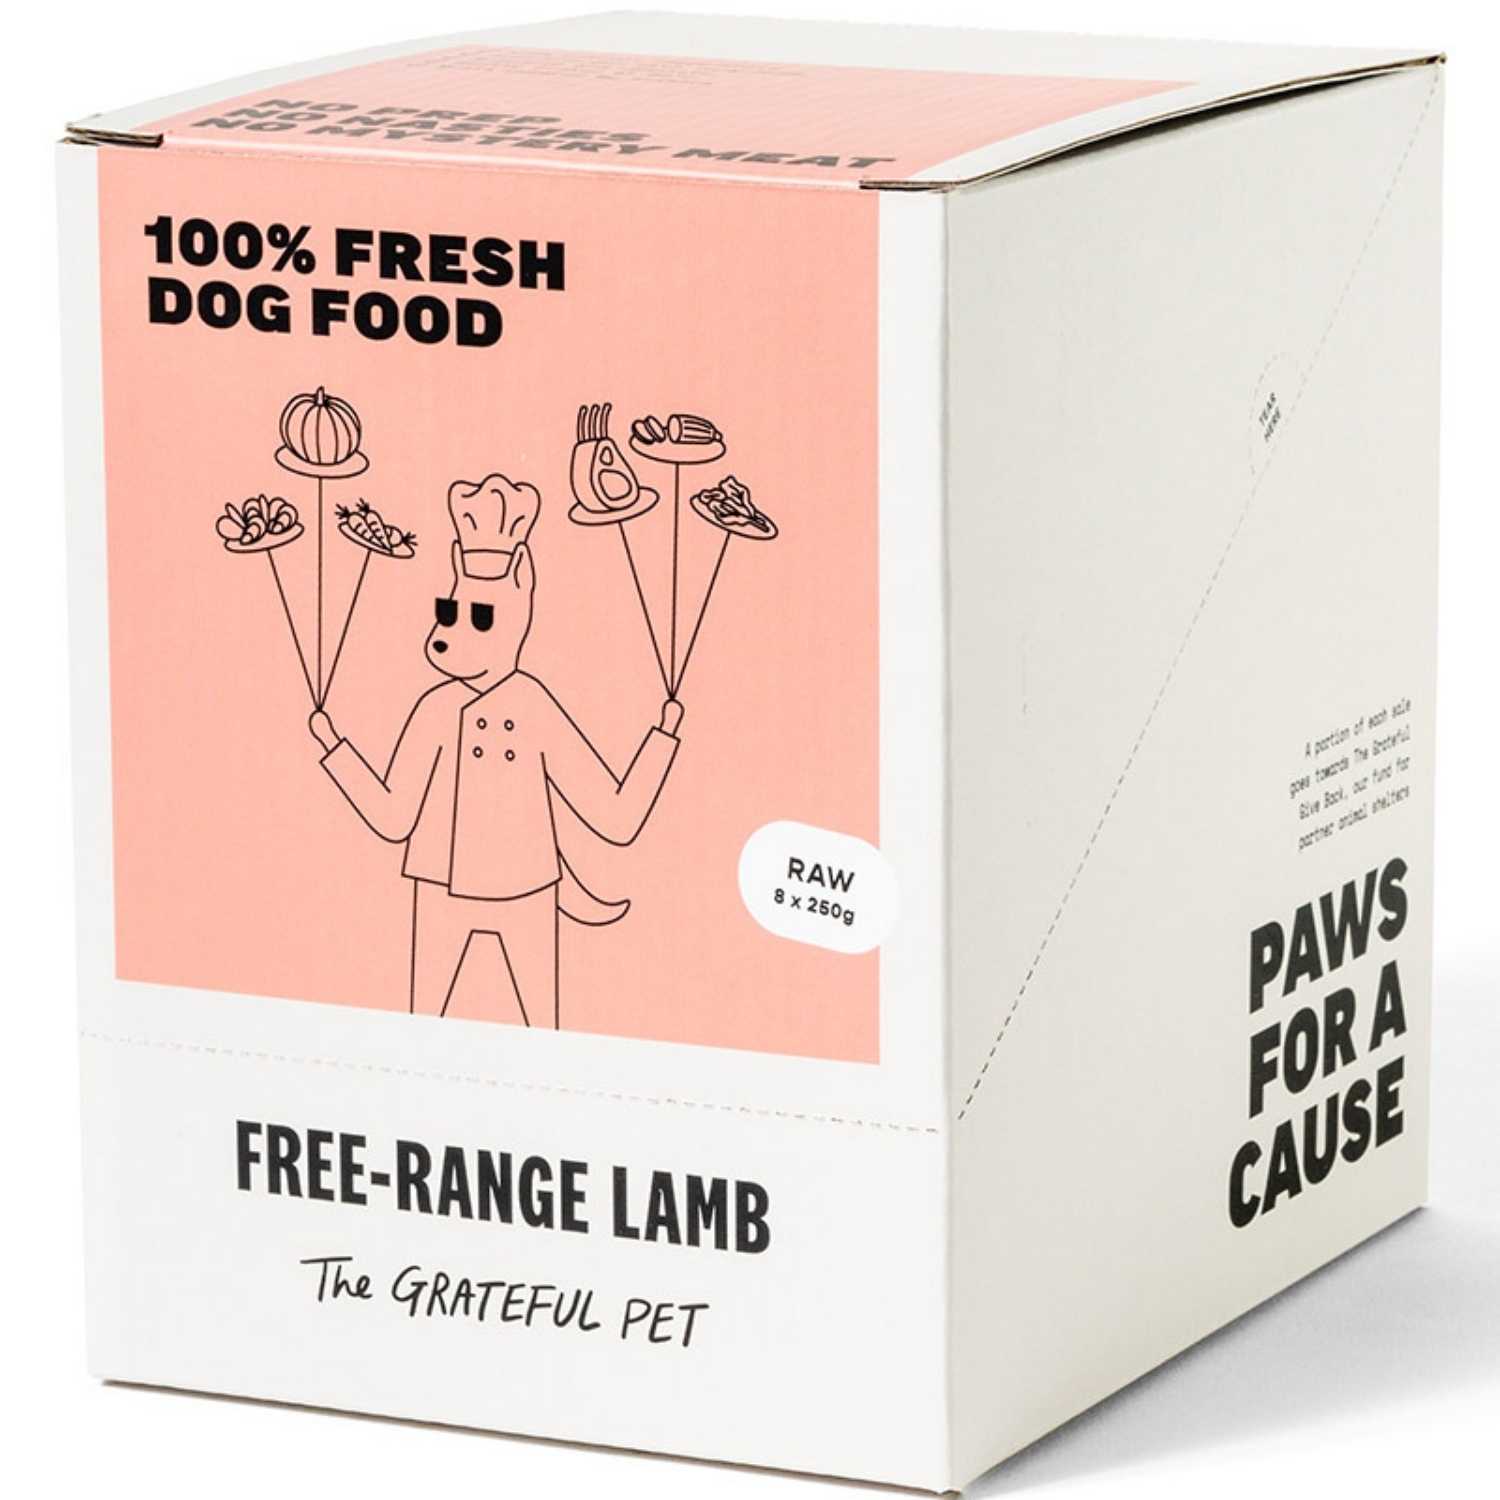 The Grateful Pet - Raw (Range-Free Lamb) - Dog (8 x 250g Pouch) Food (Case)